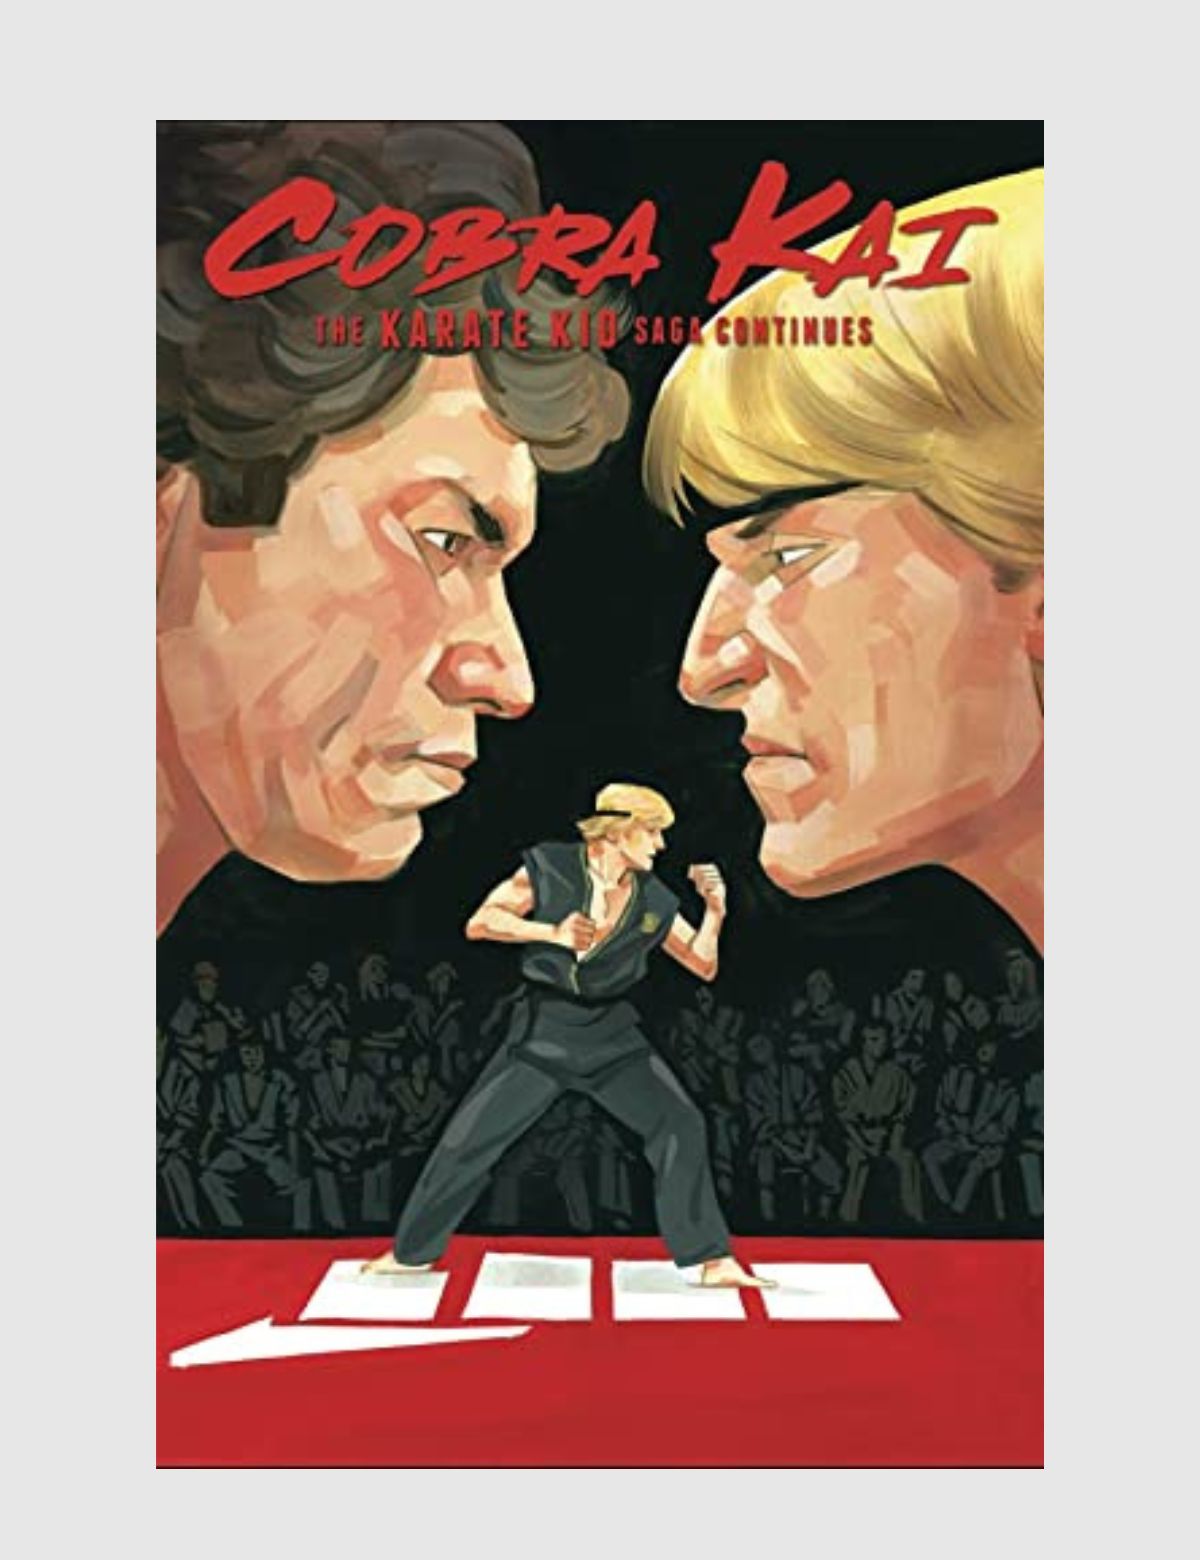 Buy Cobra Kai: The Karate Kid Saga Continues